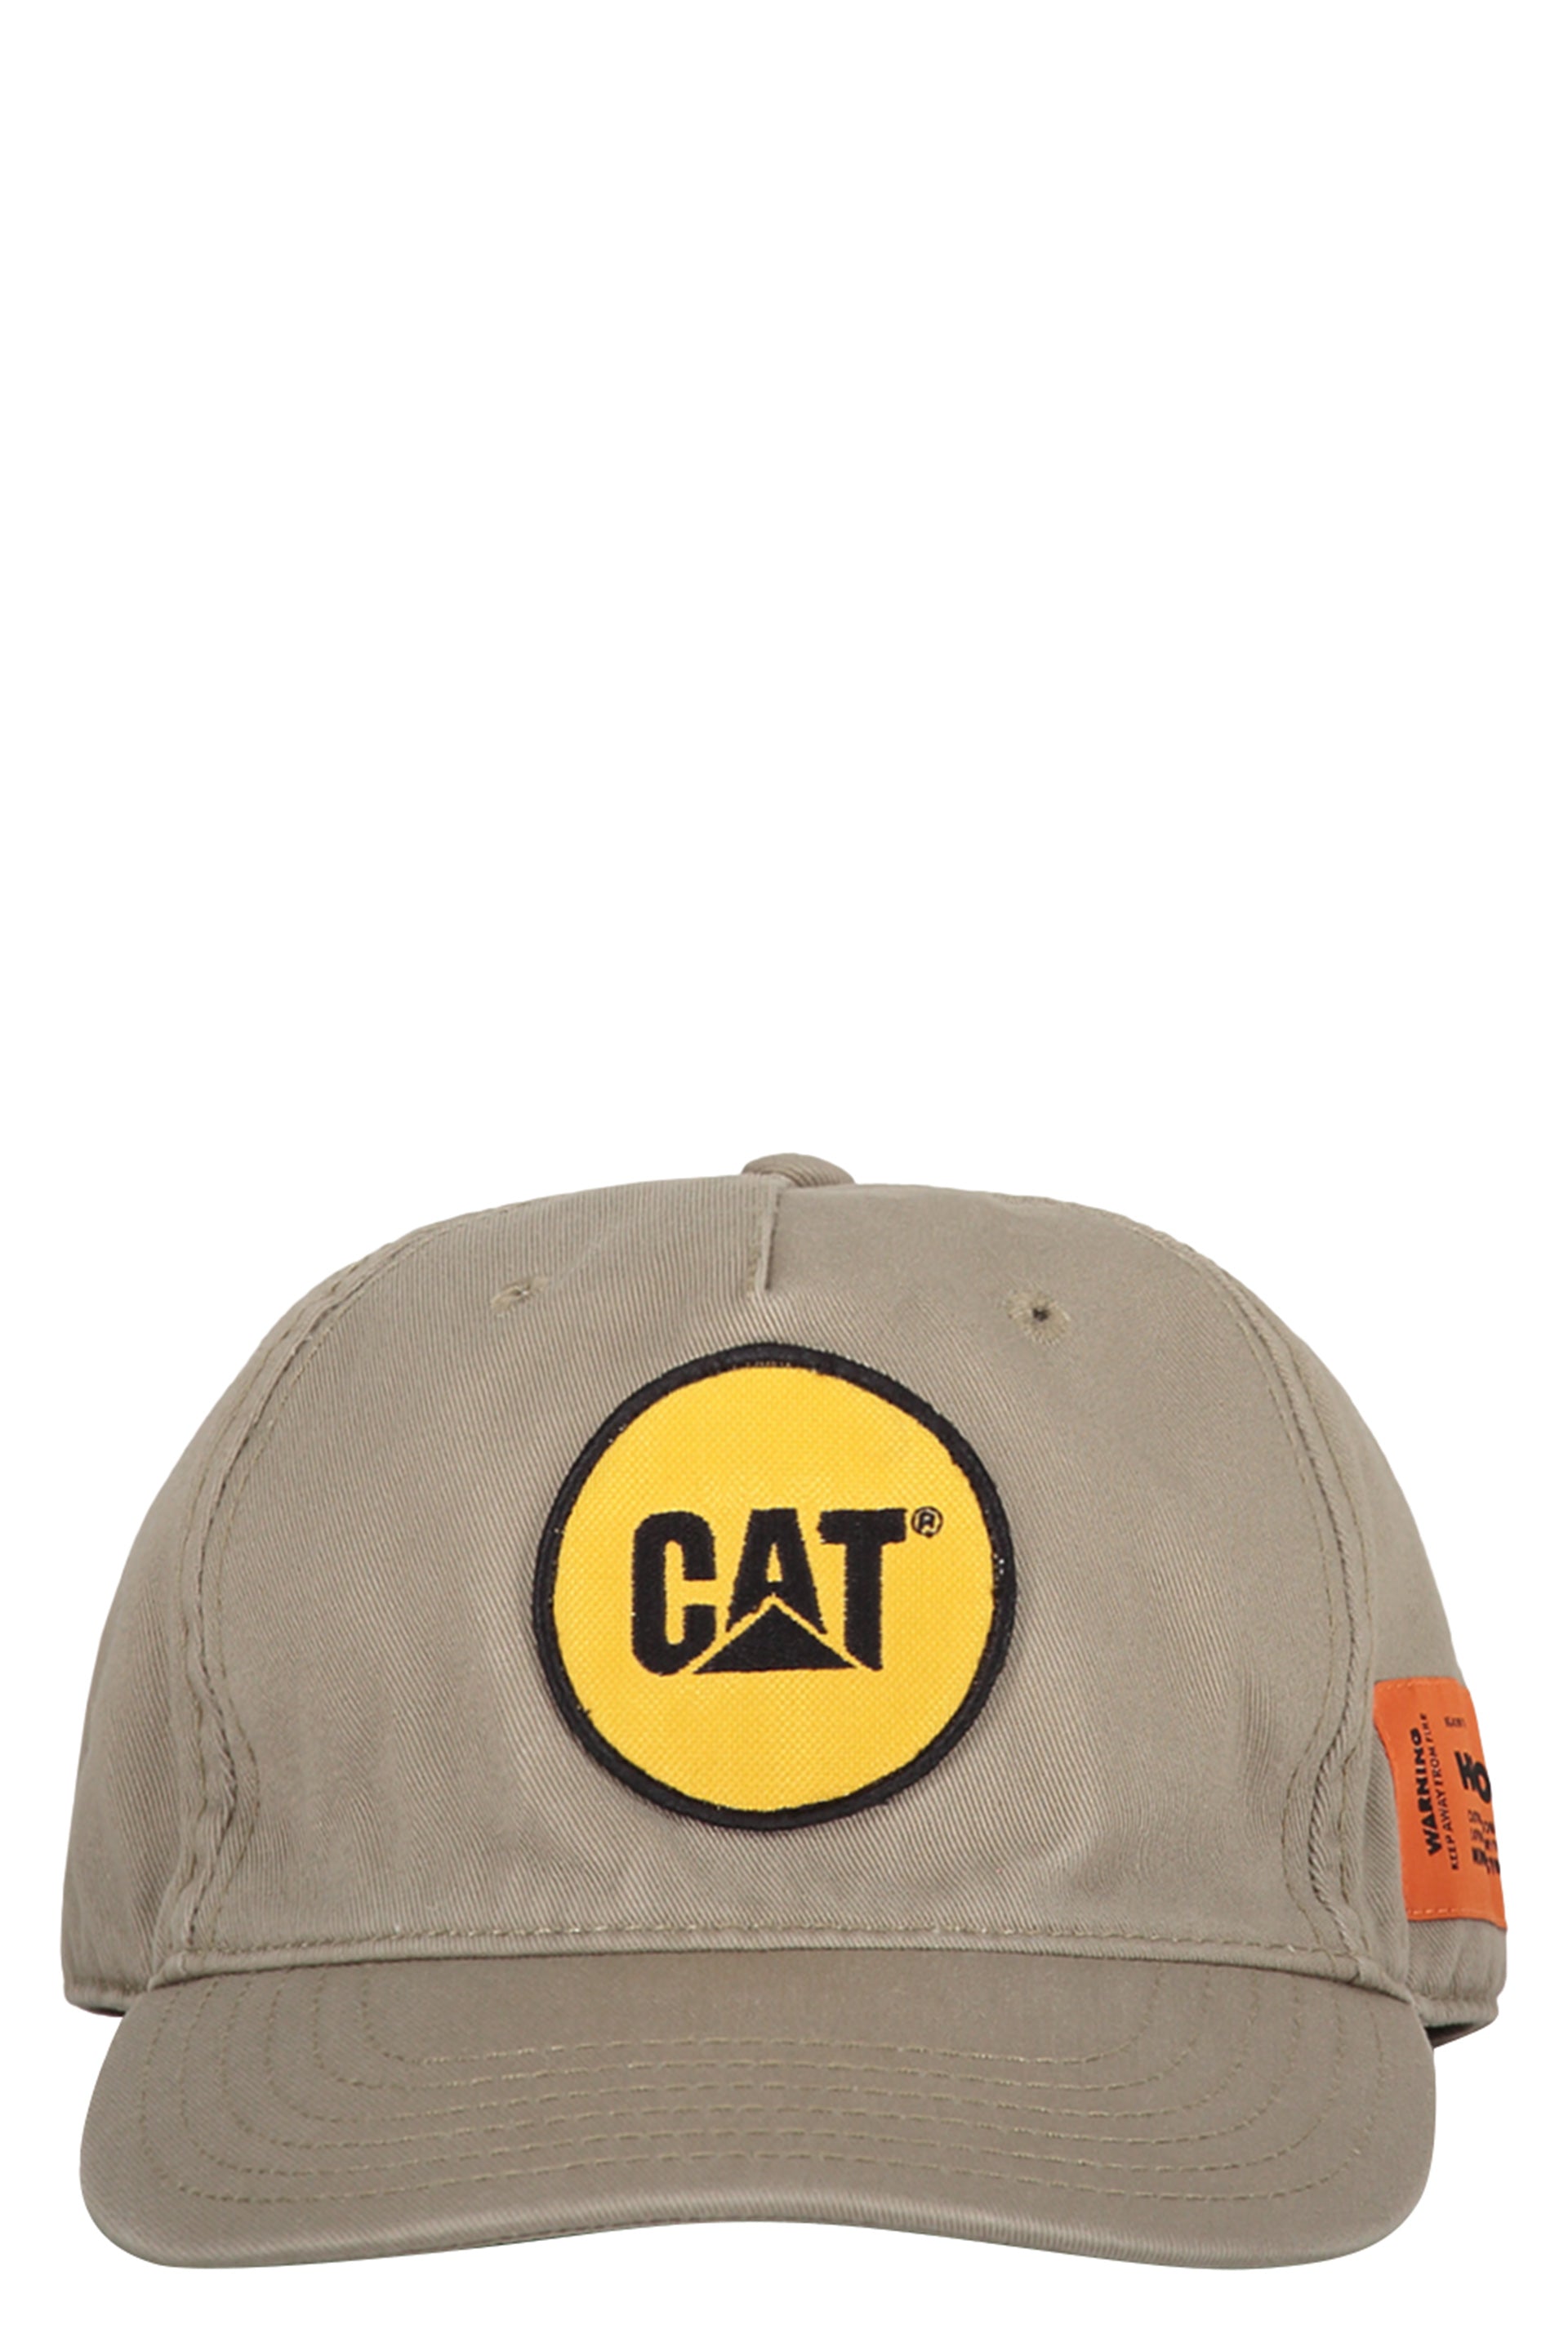 Heron Preston x Cat logo baseball cap